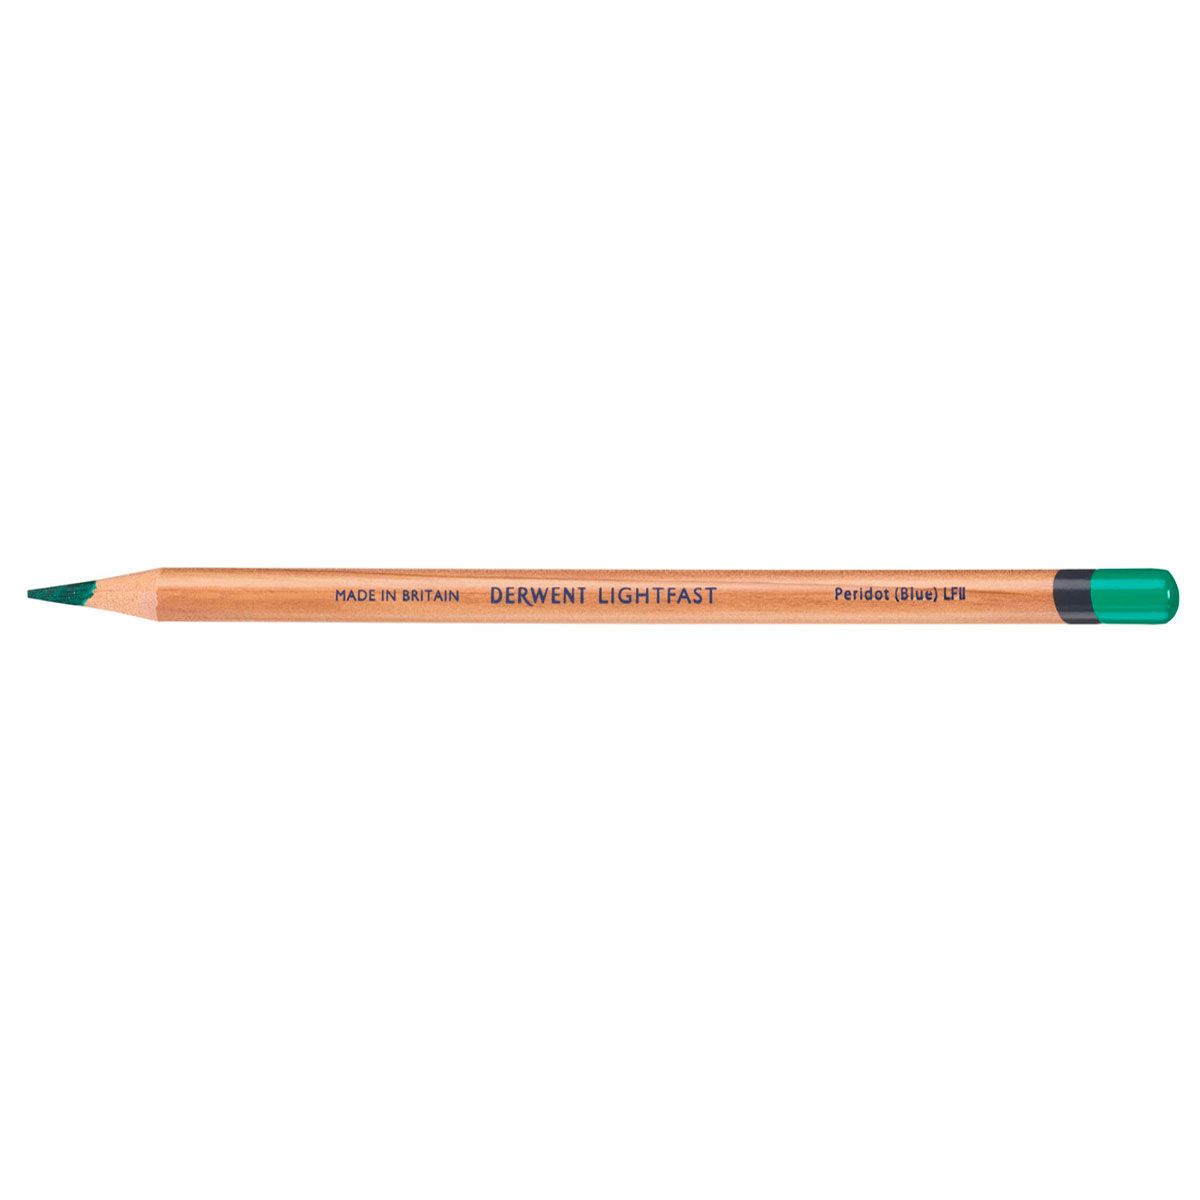 NEW Derwent Lightfast Pencil Colour: Peridot (Blue)